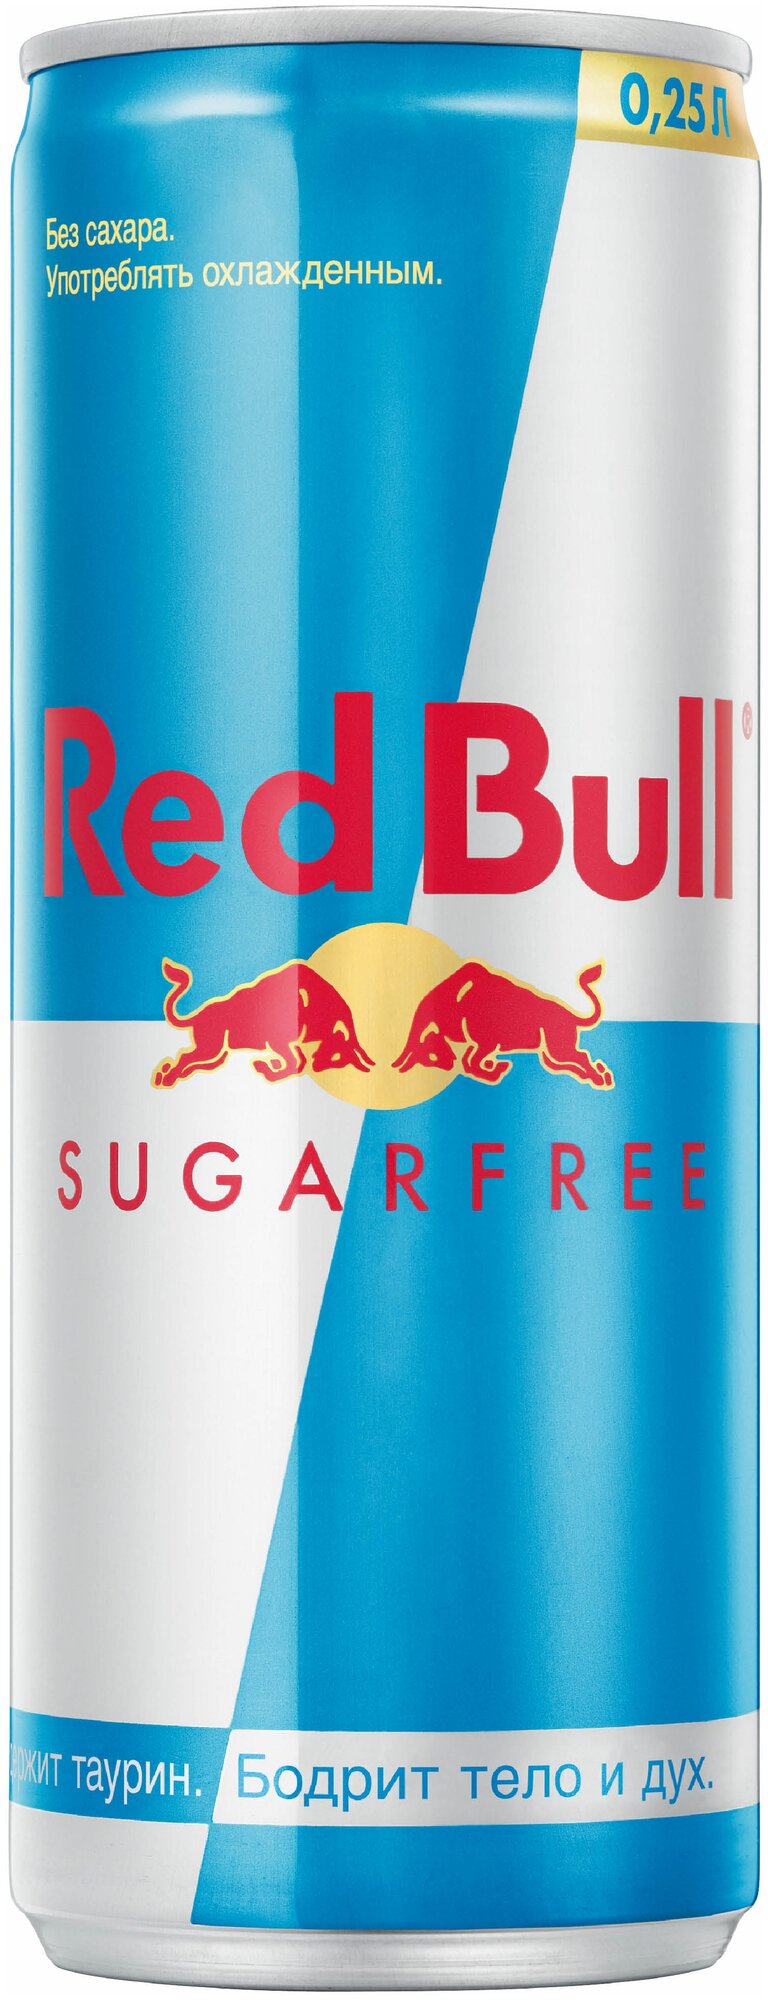 Энергетический напиток Red Bull 0,25 Ж/Б (товар продается поштучно) без сахара - фотография № 1